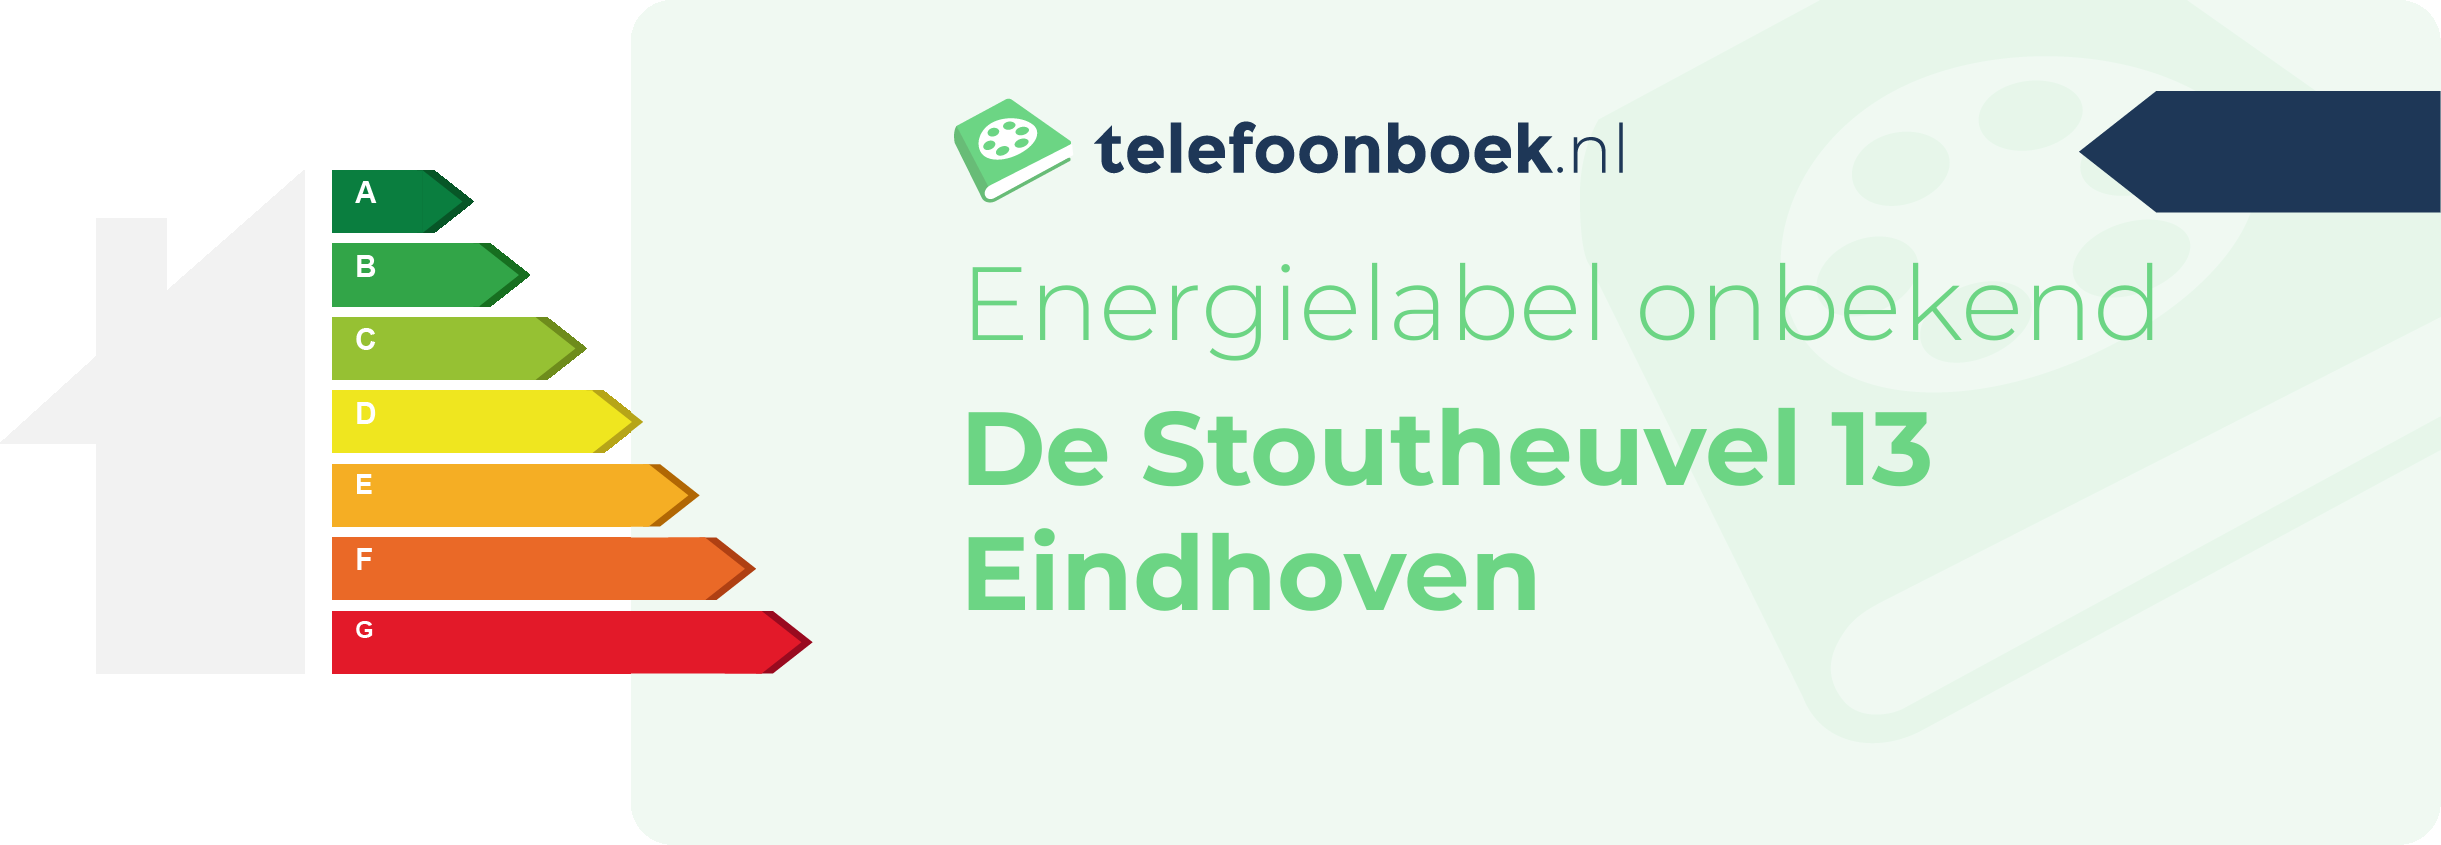 Energielabel De Stoutheuvel 13 Eindhoven